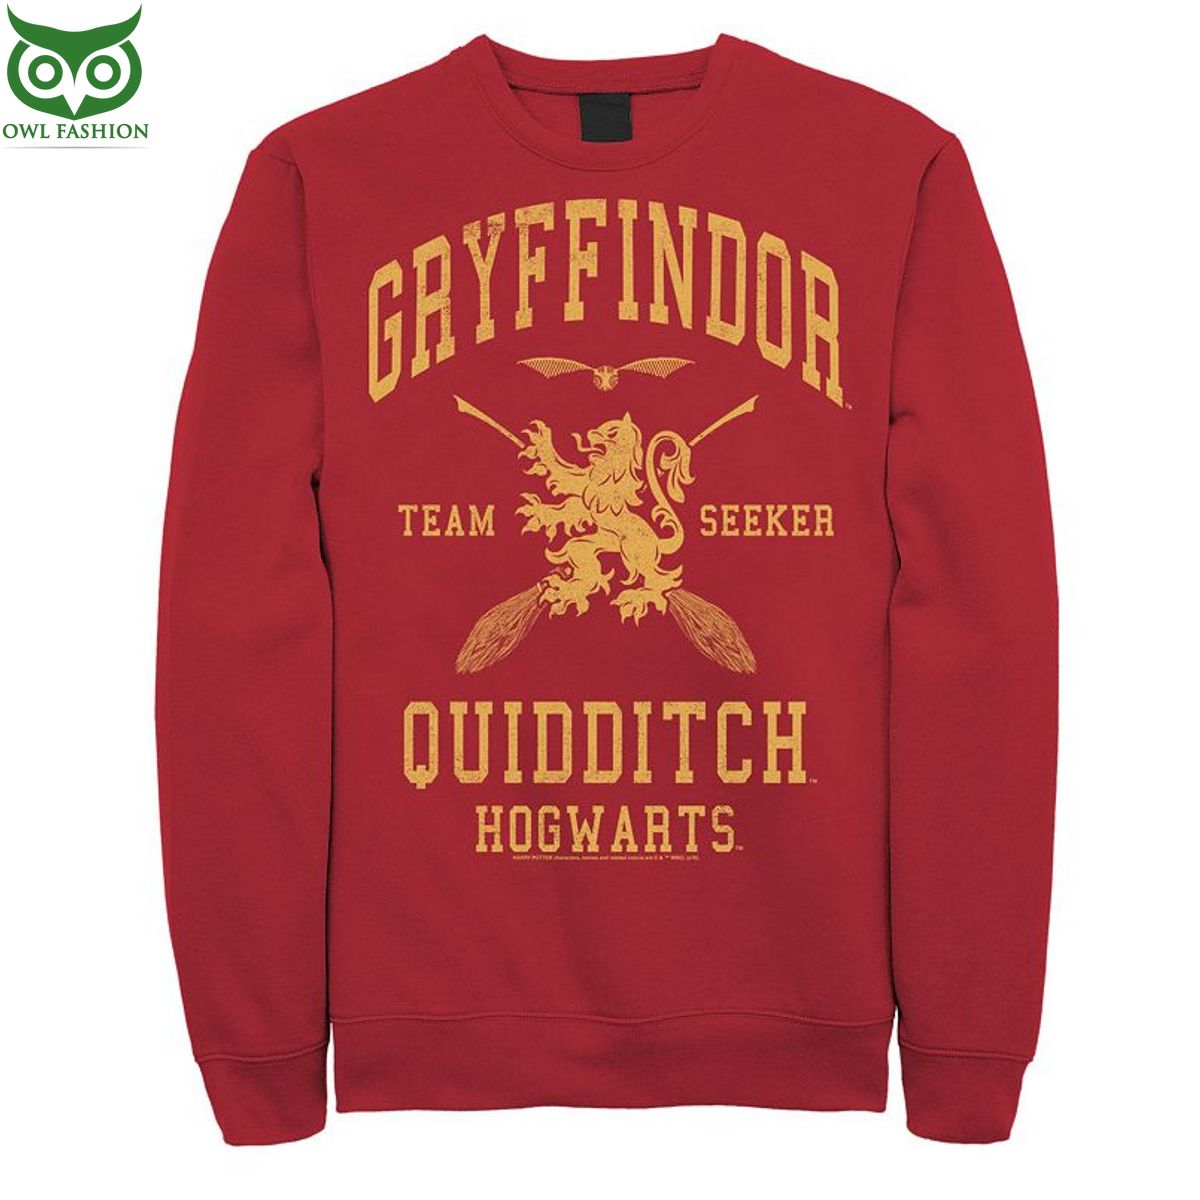 Quidditch hogwarts Team seeker Gryffindor sweater harry potter shop owl fashion